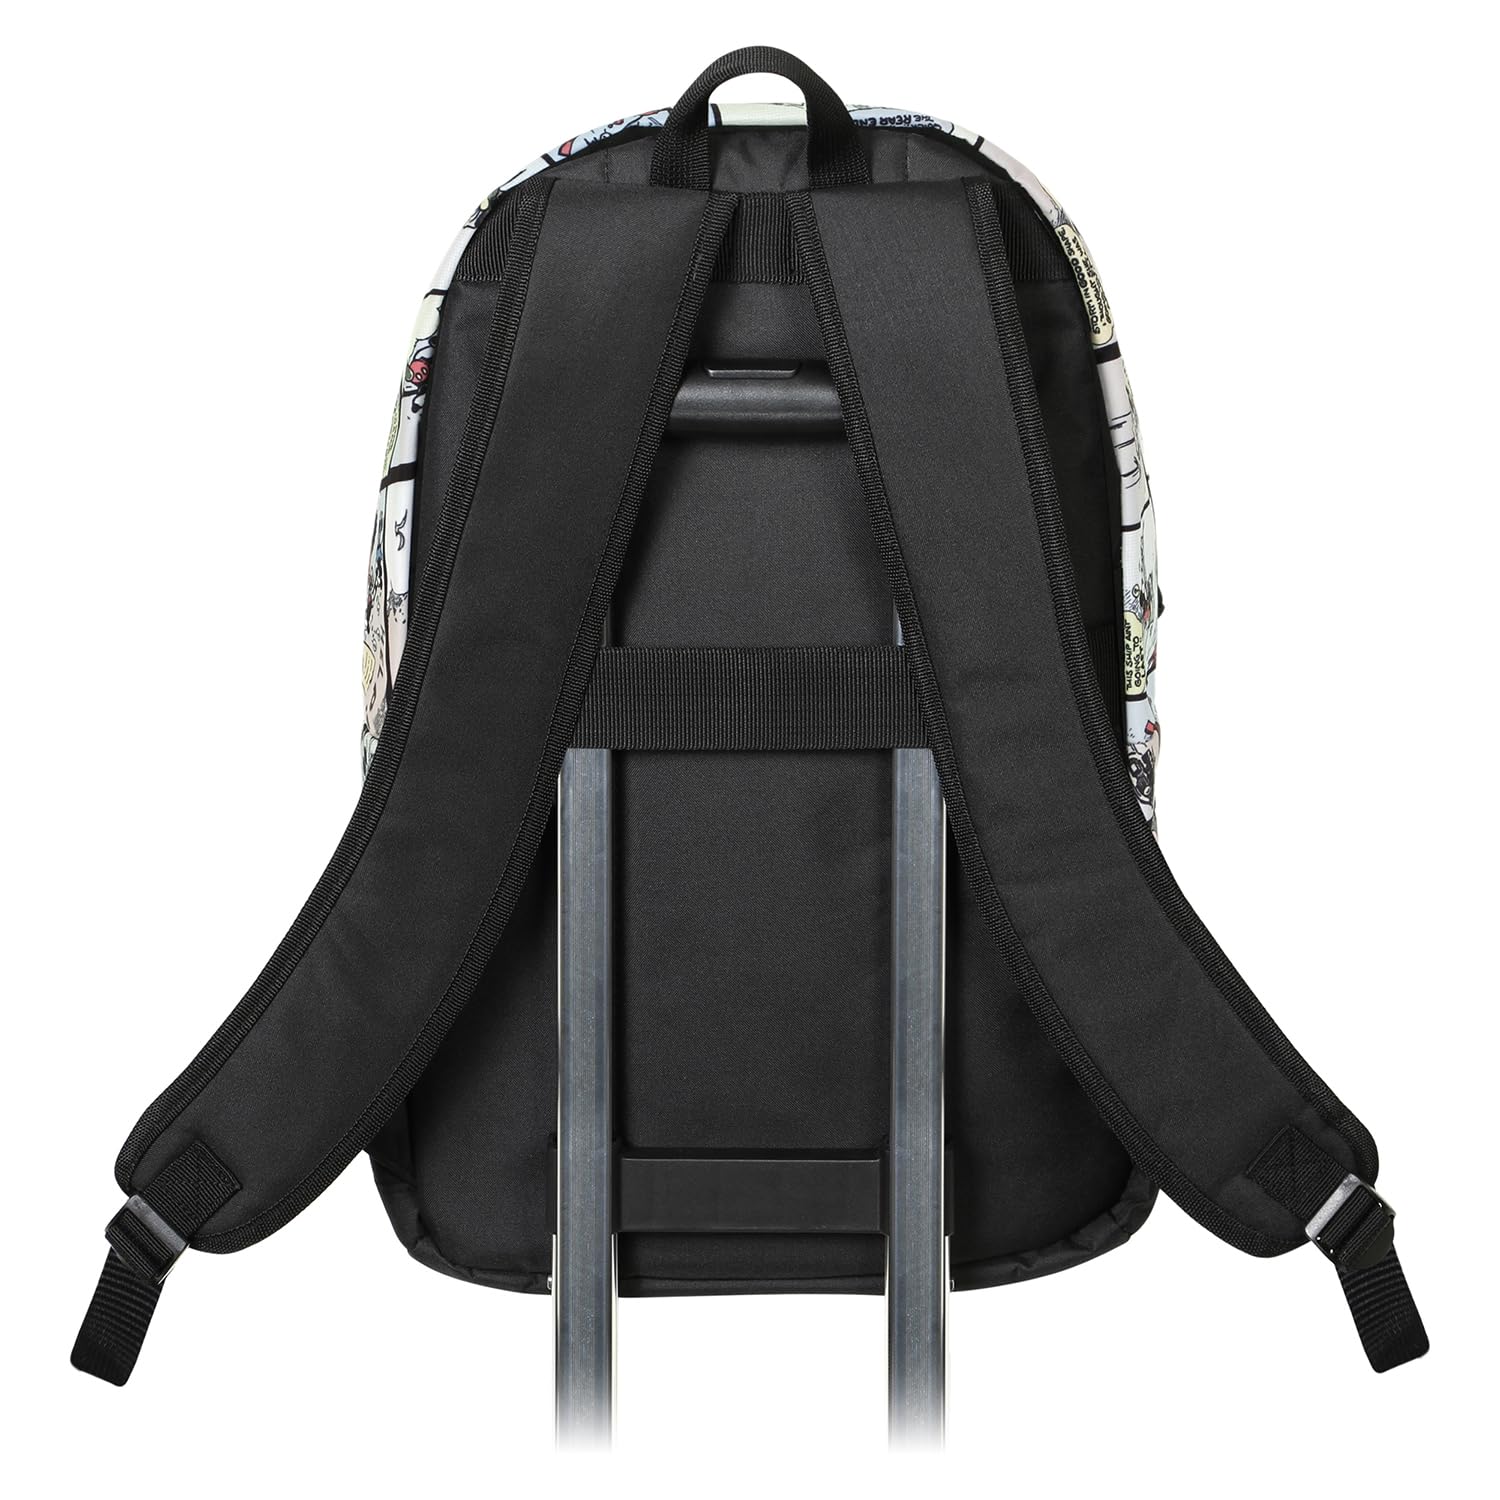 Disney Fan HS Backpack 2.0 Ink, Black, One Size